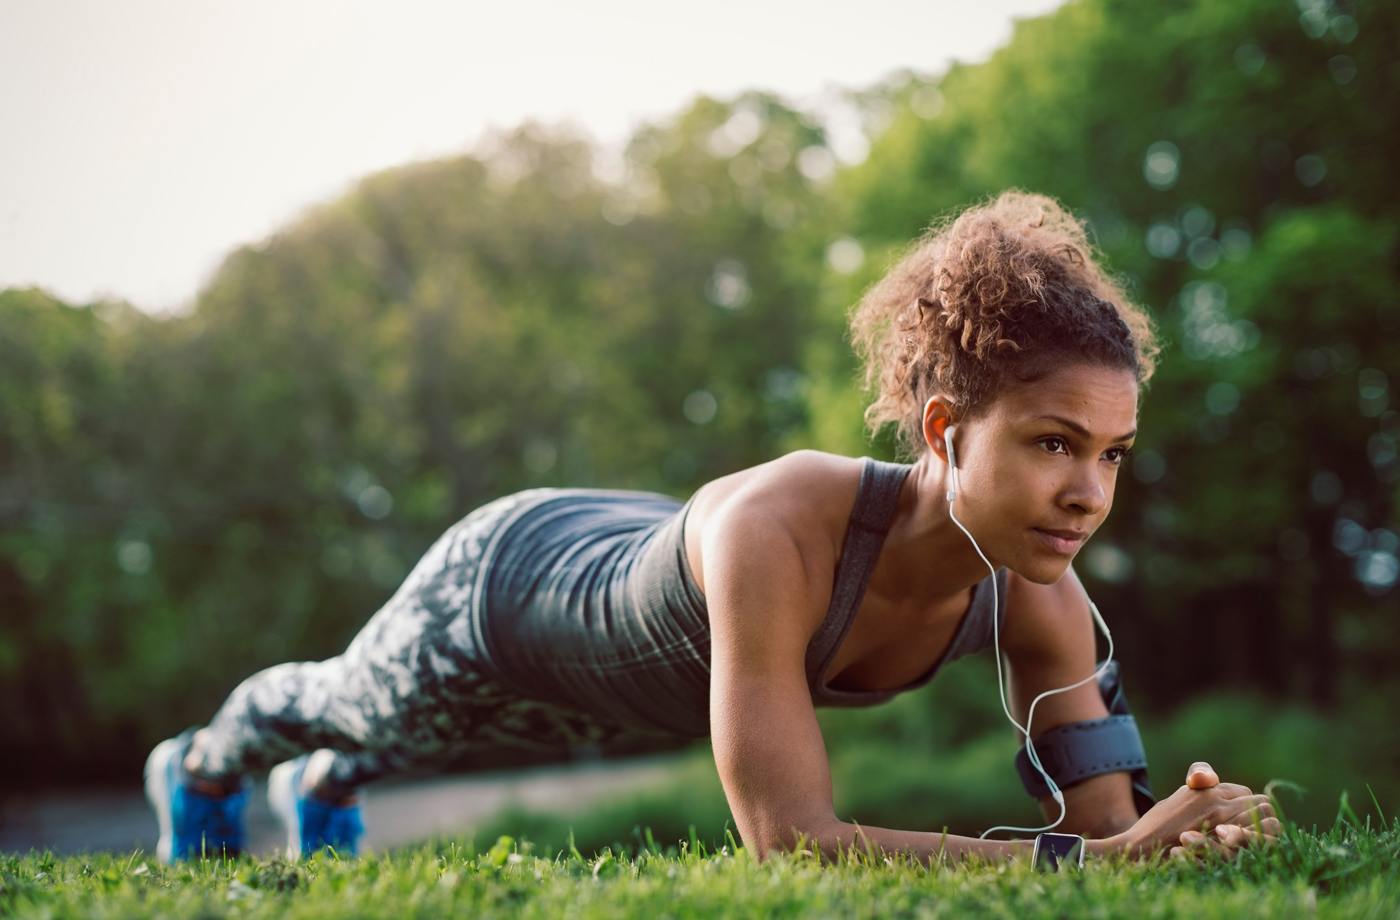 The Jennifer Lopez workout routine has planks